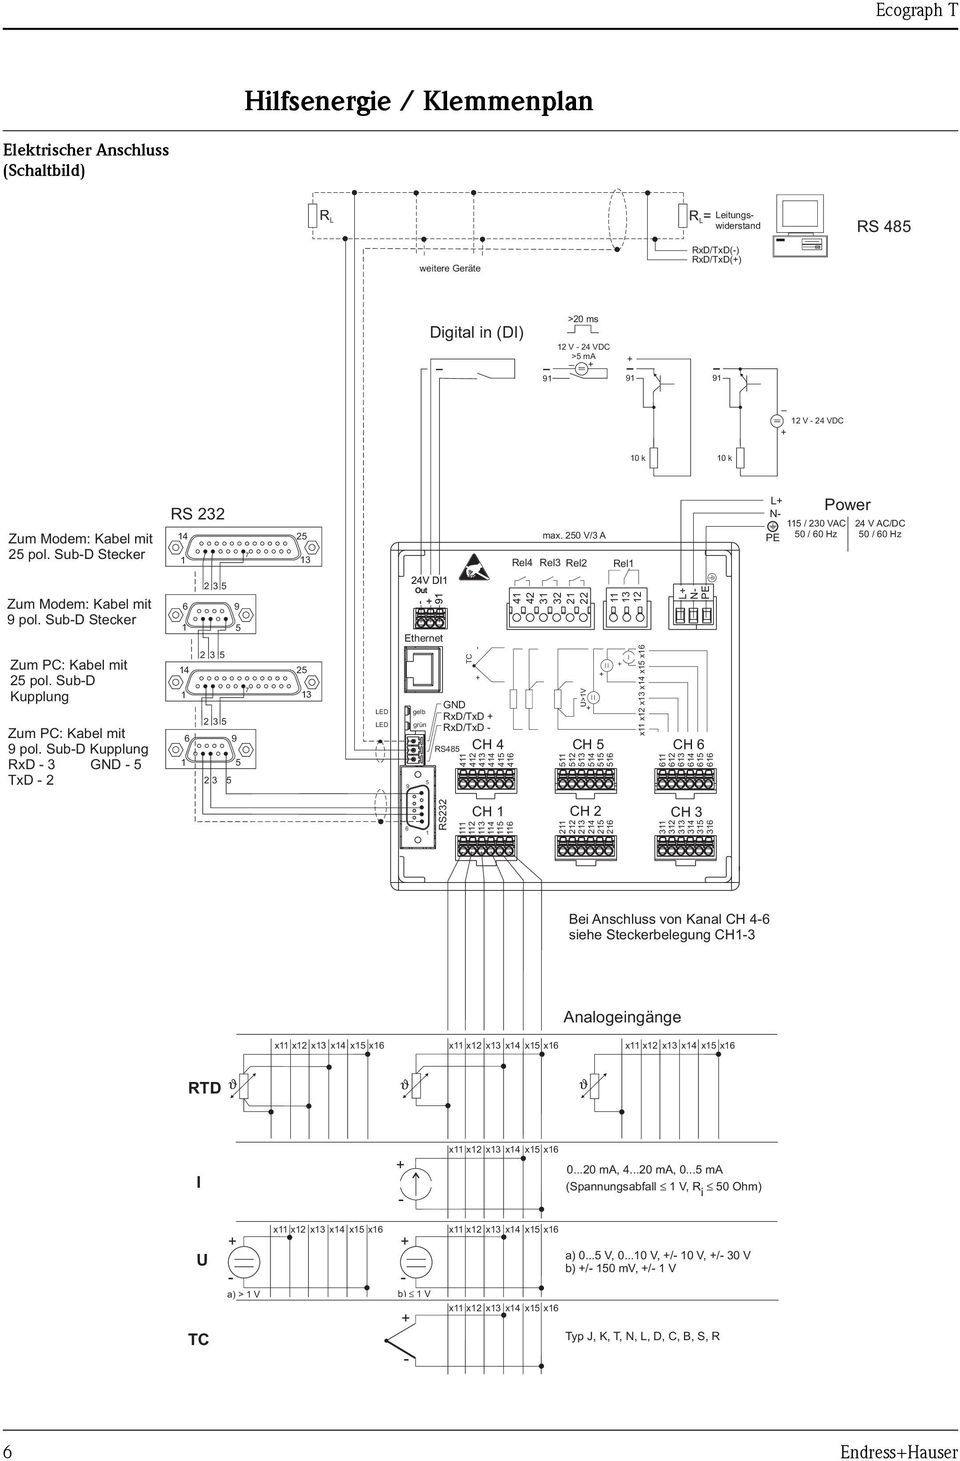 Sub-D Stecker 6 1 2 3 5 9 5 Ethernet 41 42 31 32 21 22 11 13 12 L N- PE Zum PC: Kabel mit 25 pol. Sub-D Kupplung Zum PC: Kabel mit 9 pol.